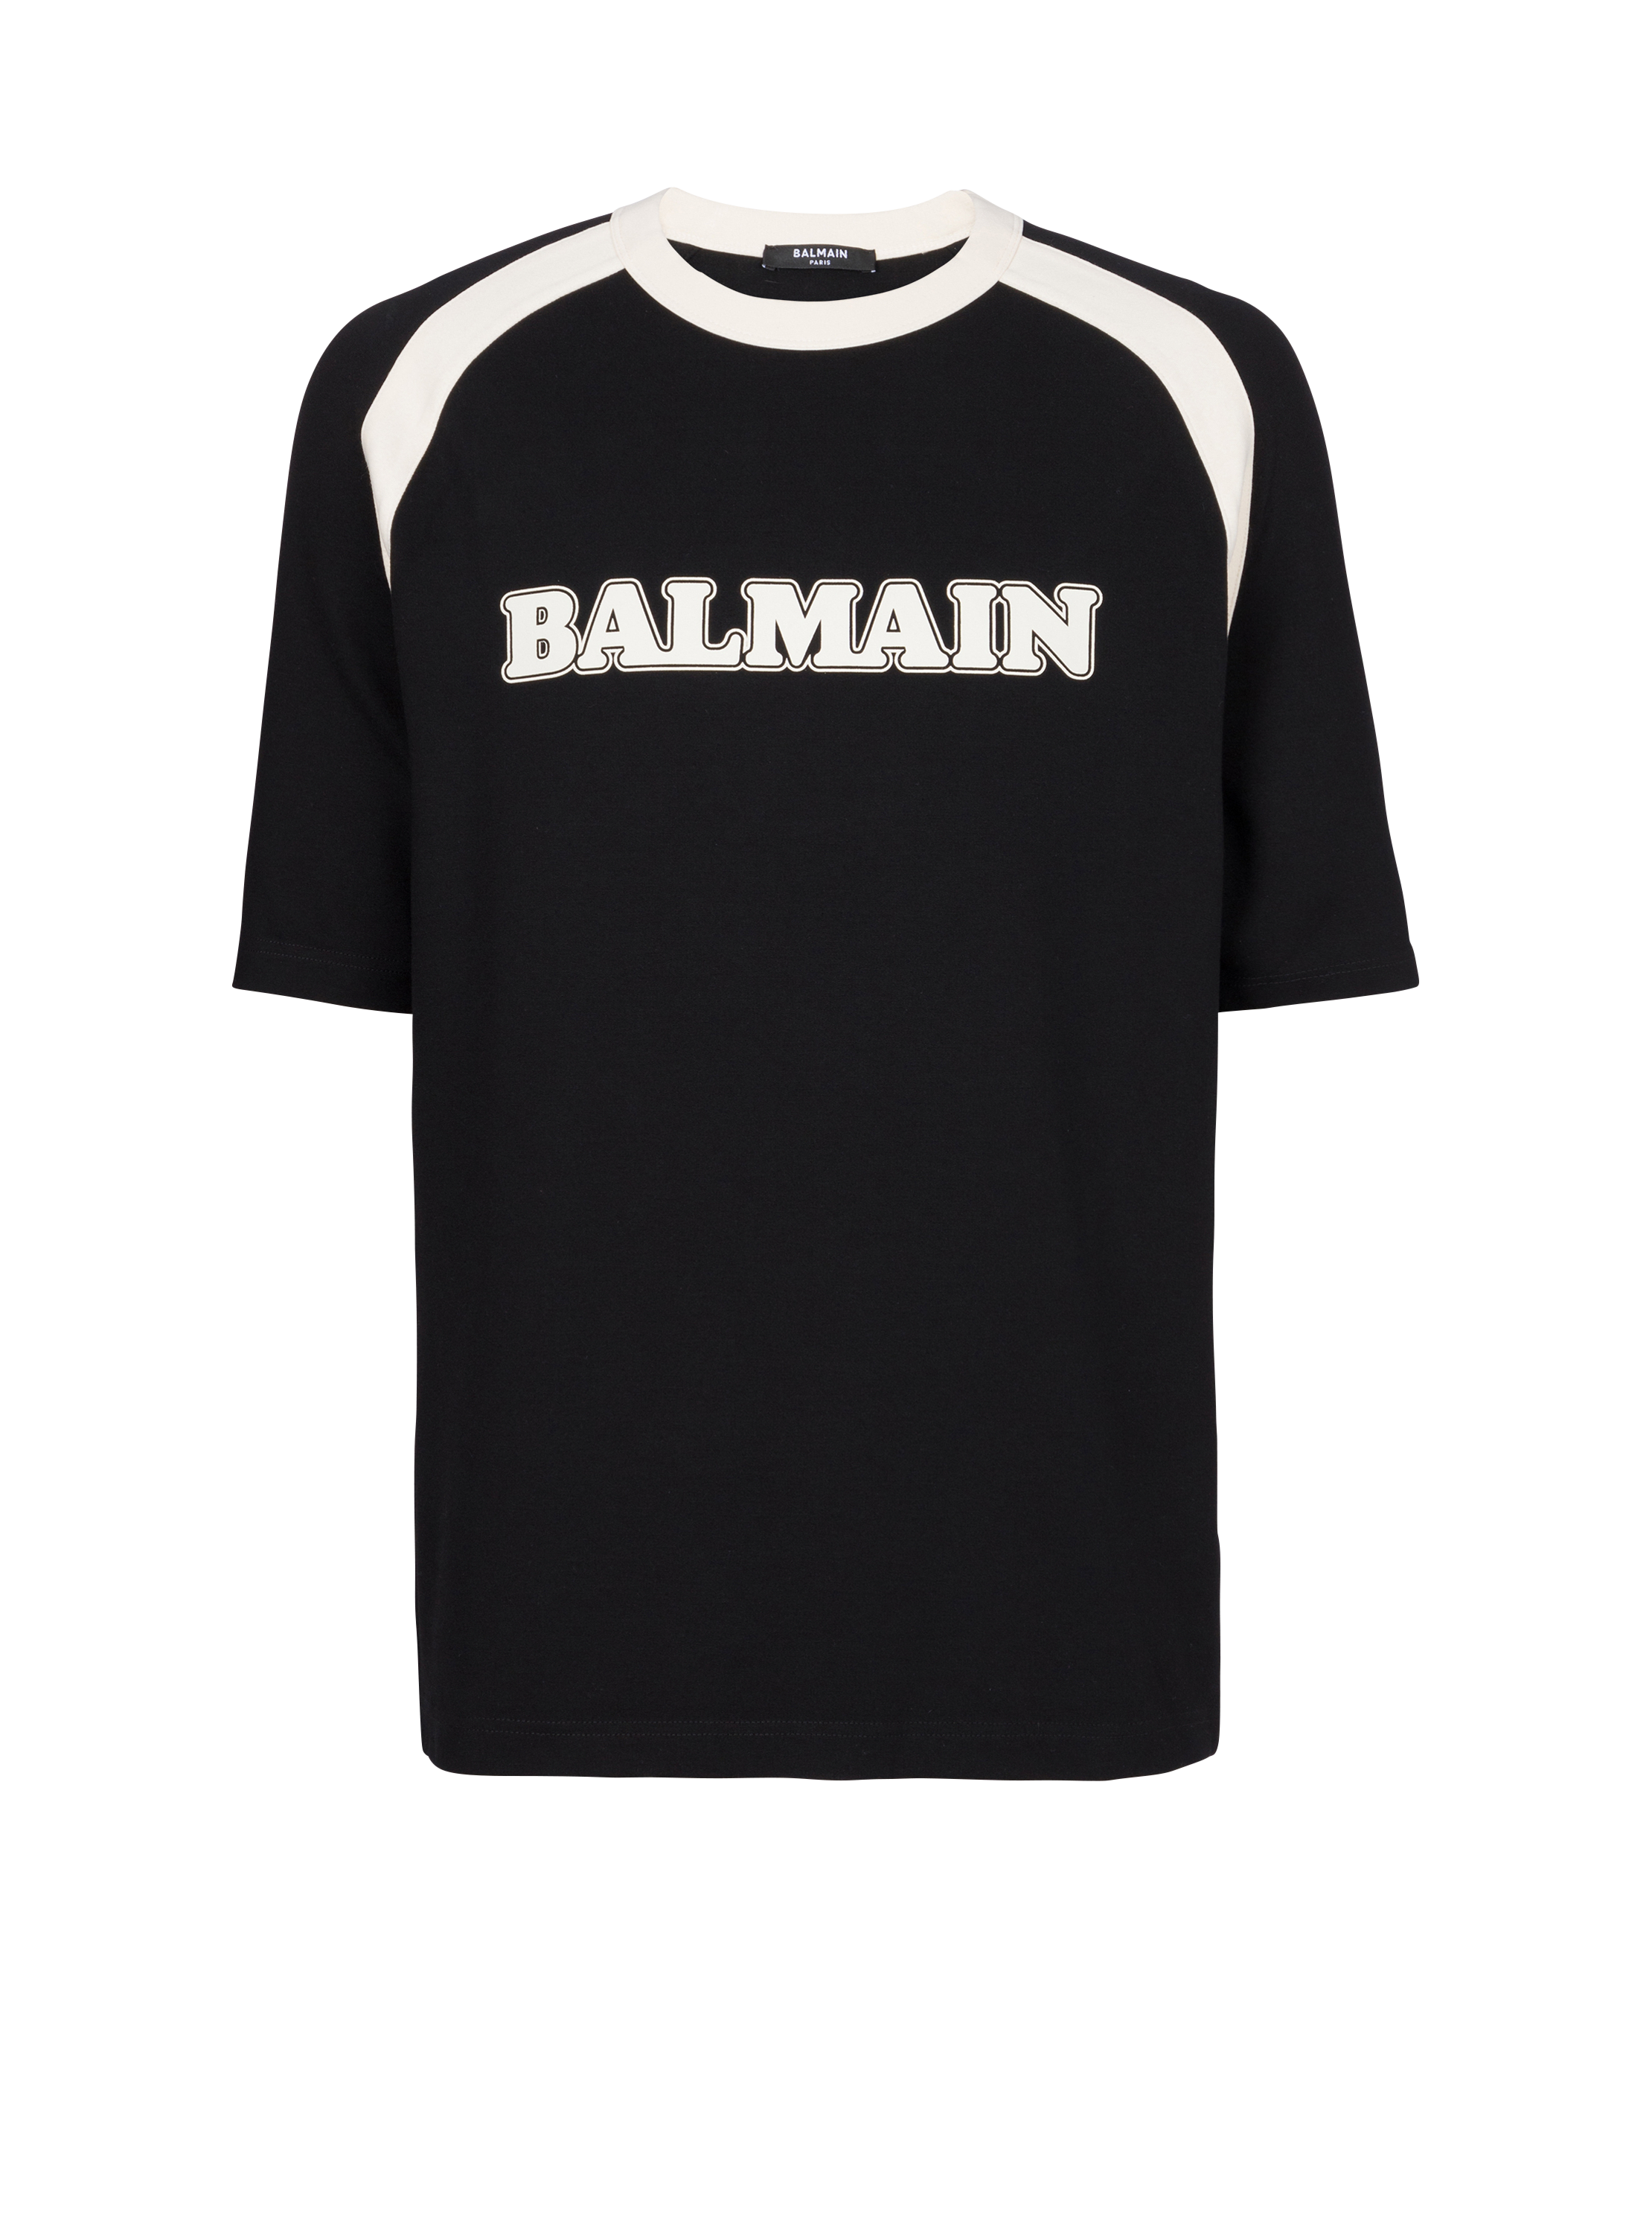 T-shirt Balmain Rétro, noir, hi-res